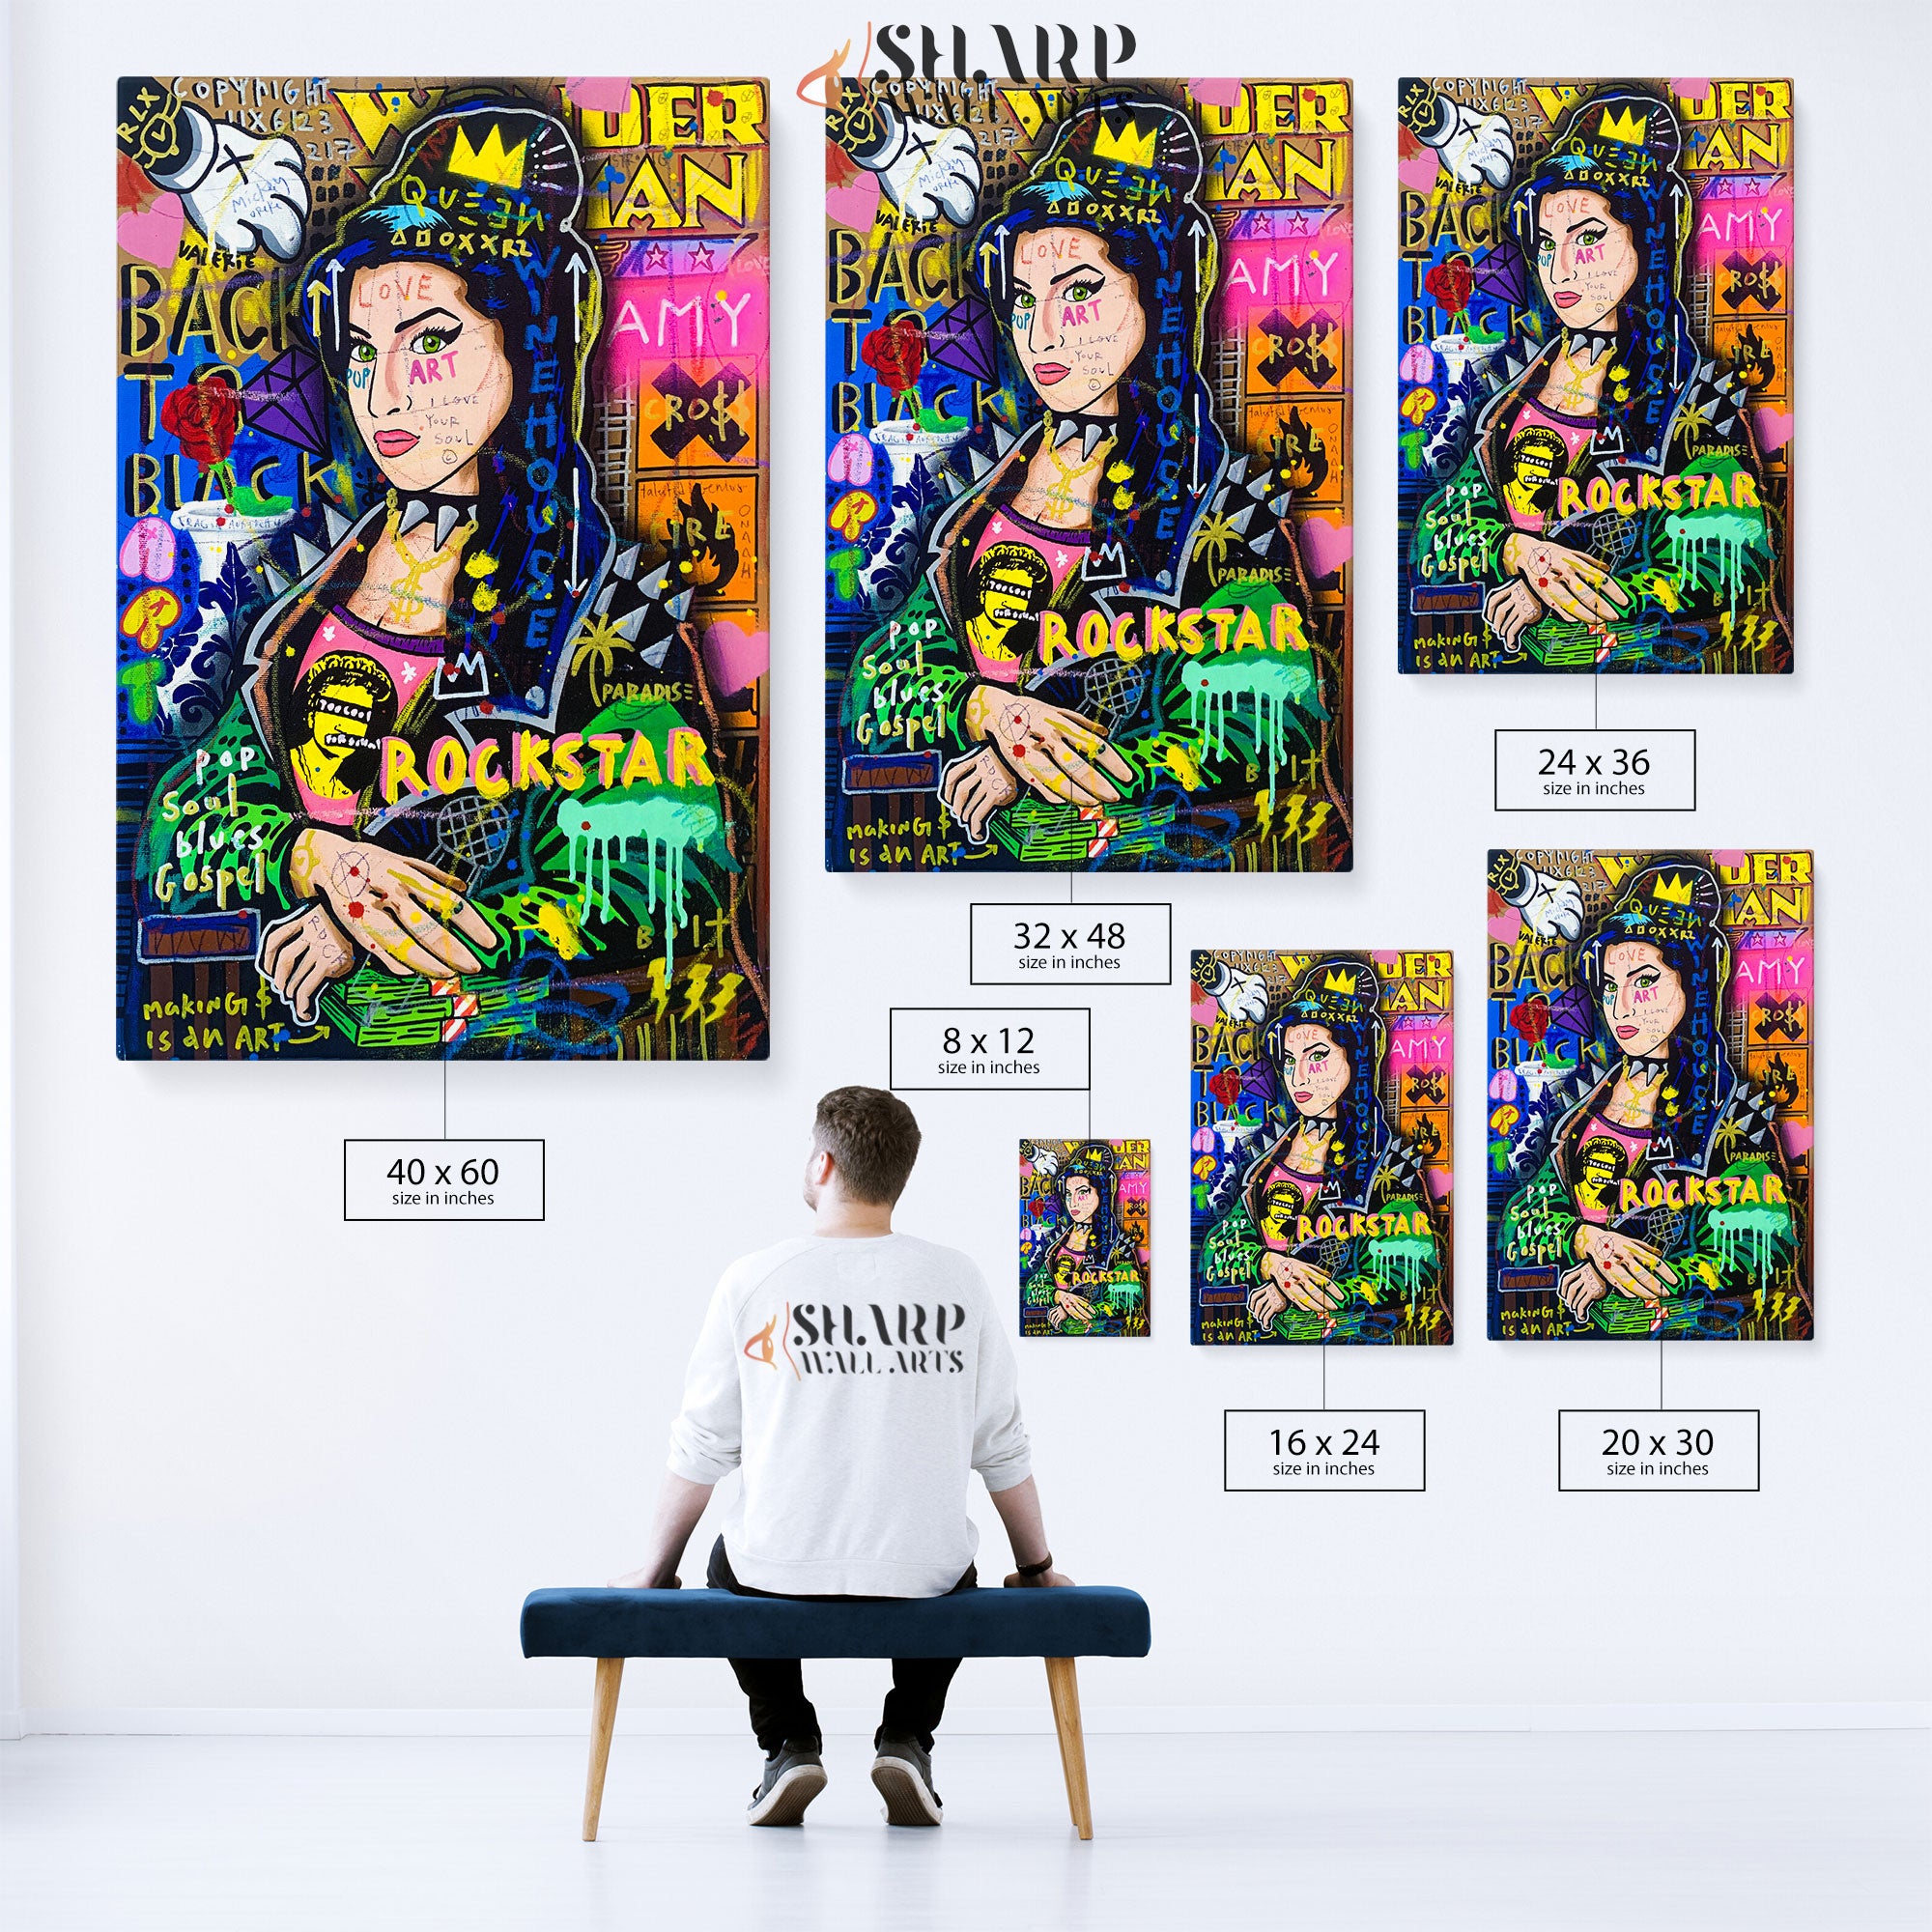 Amy Winehouse Pop Art Canvas